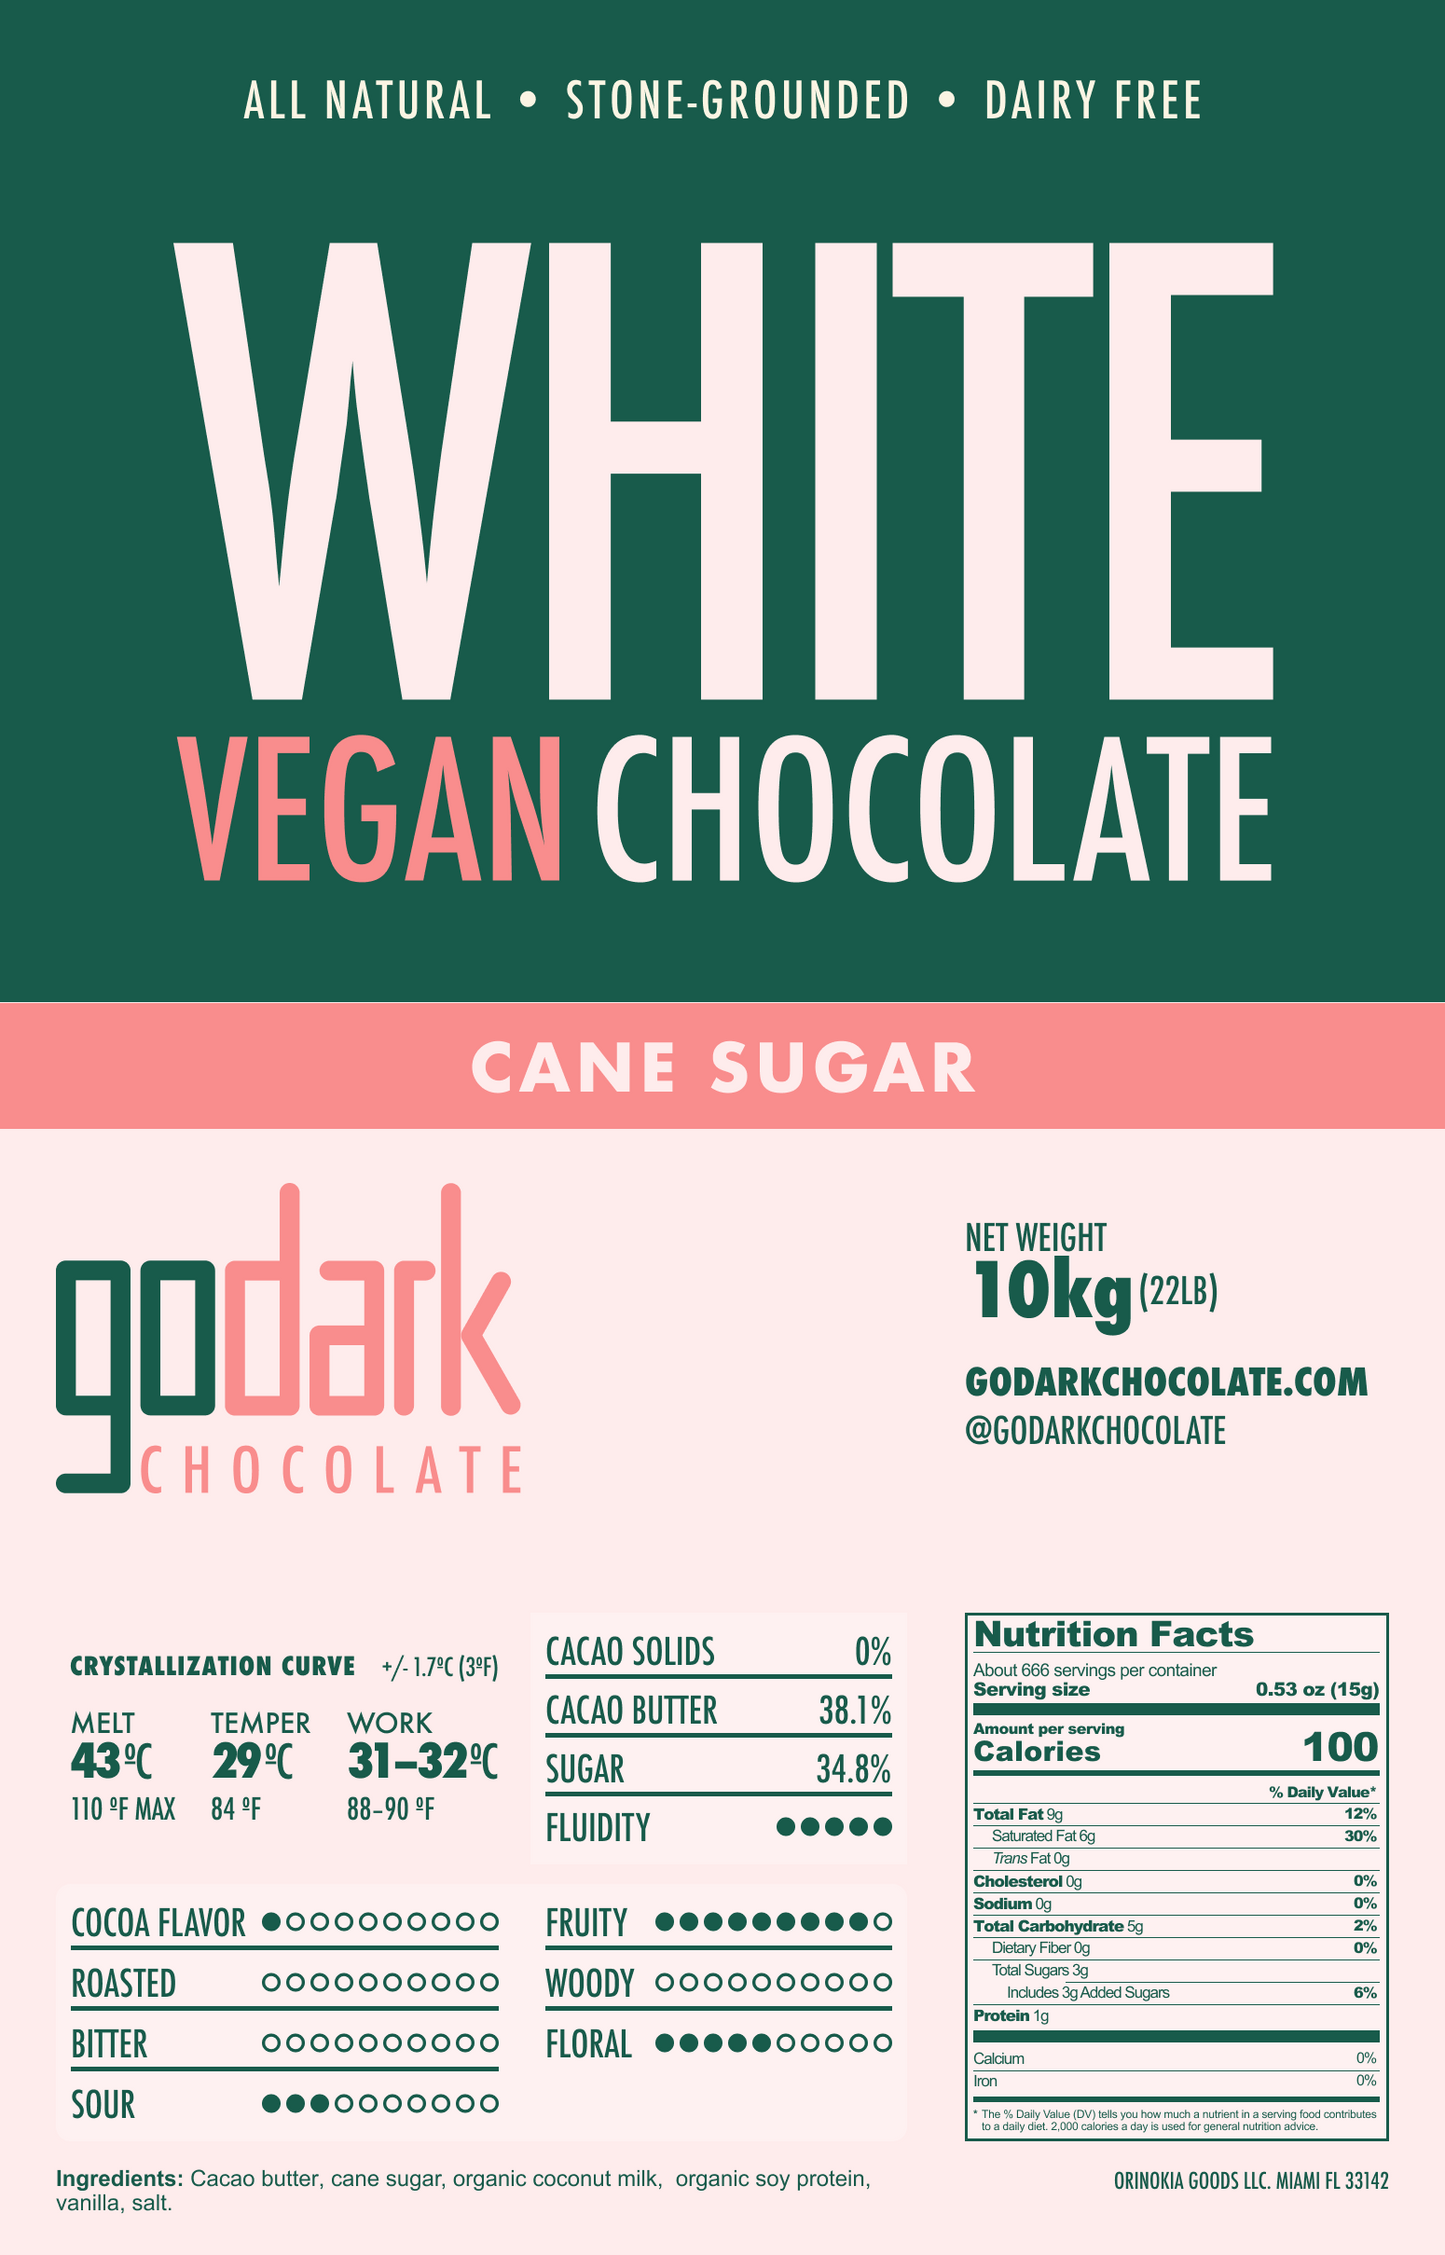 Vegan white chocolate with cane sugar